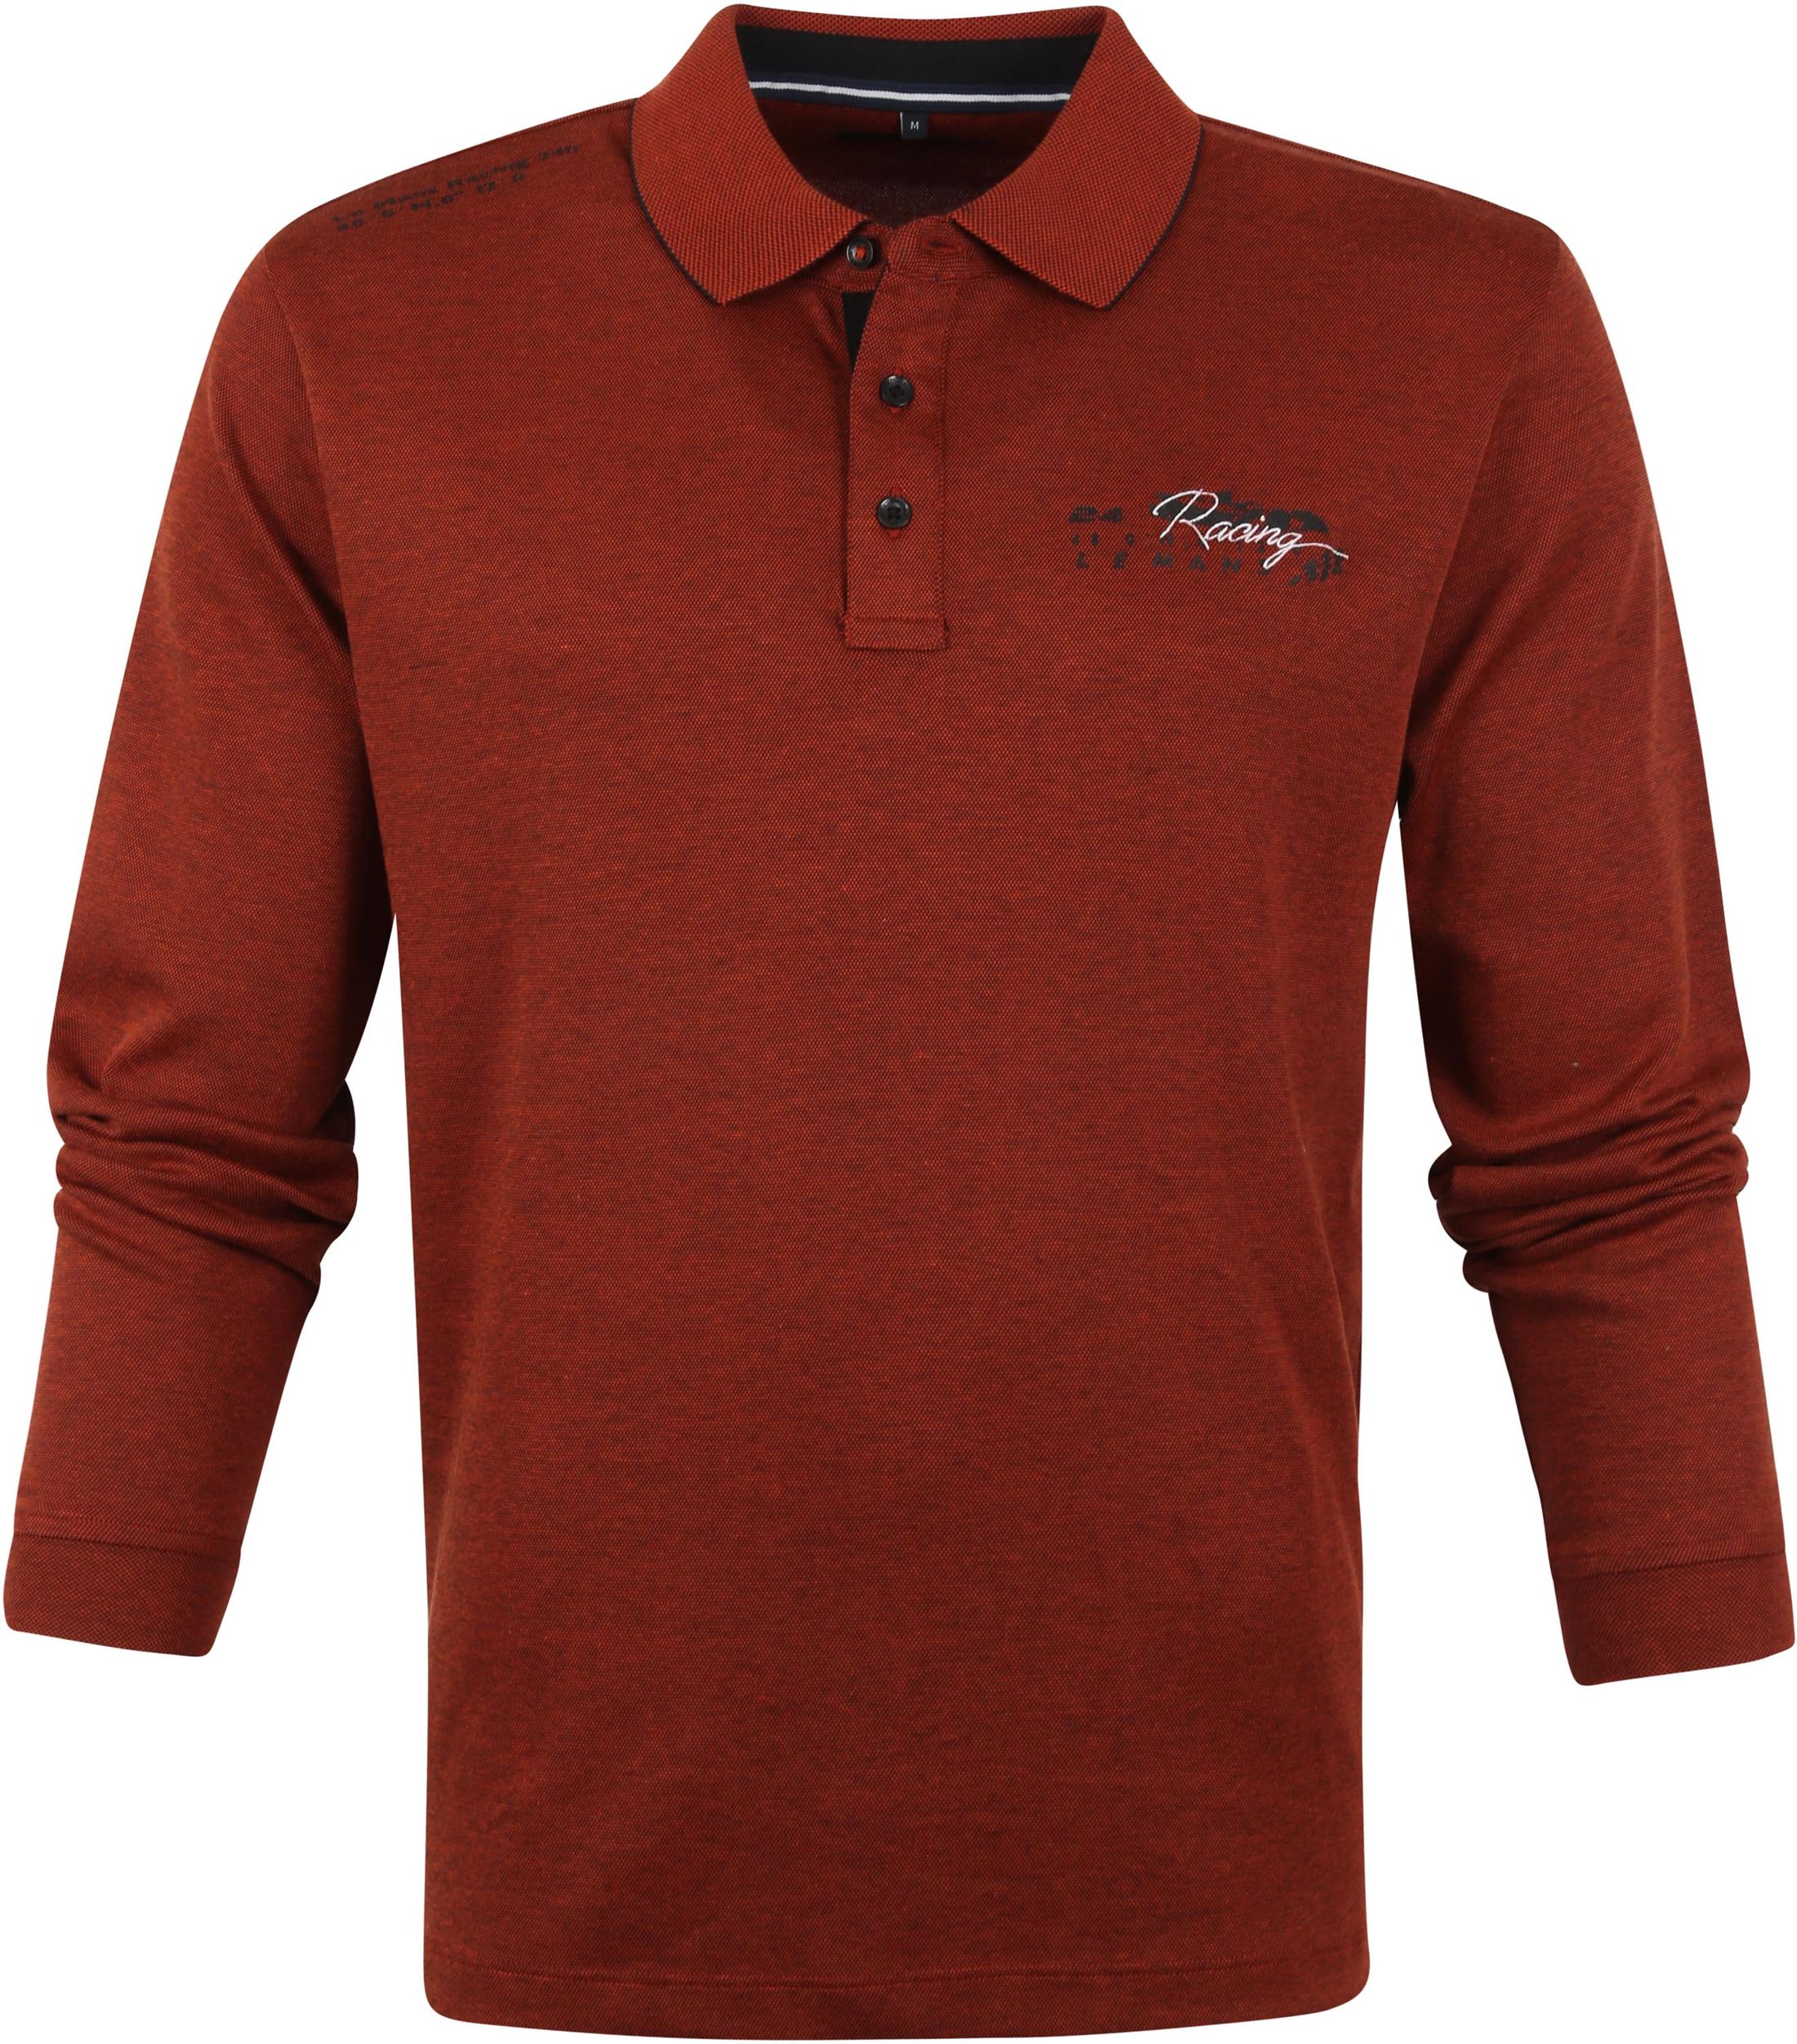 Casa Moda Long Sleeve Polo Shirt Racing Bordeaux Burgundy Red size 3XL